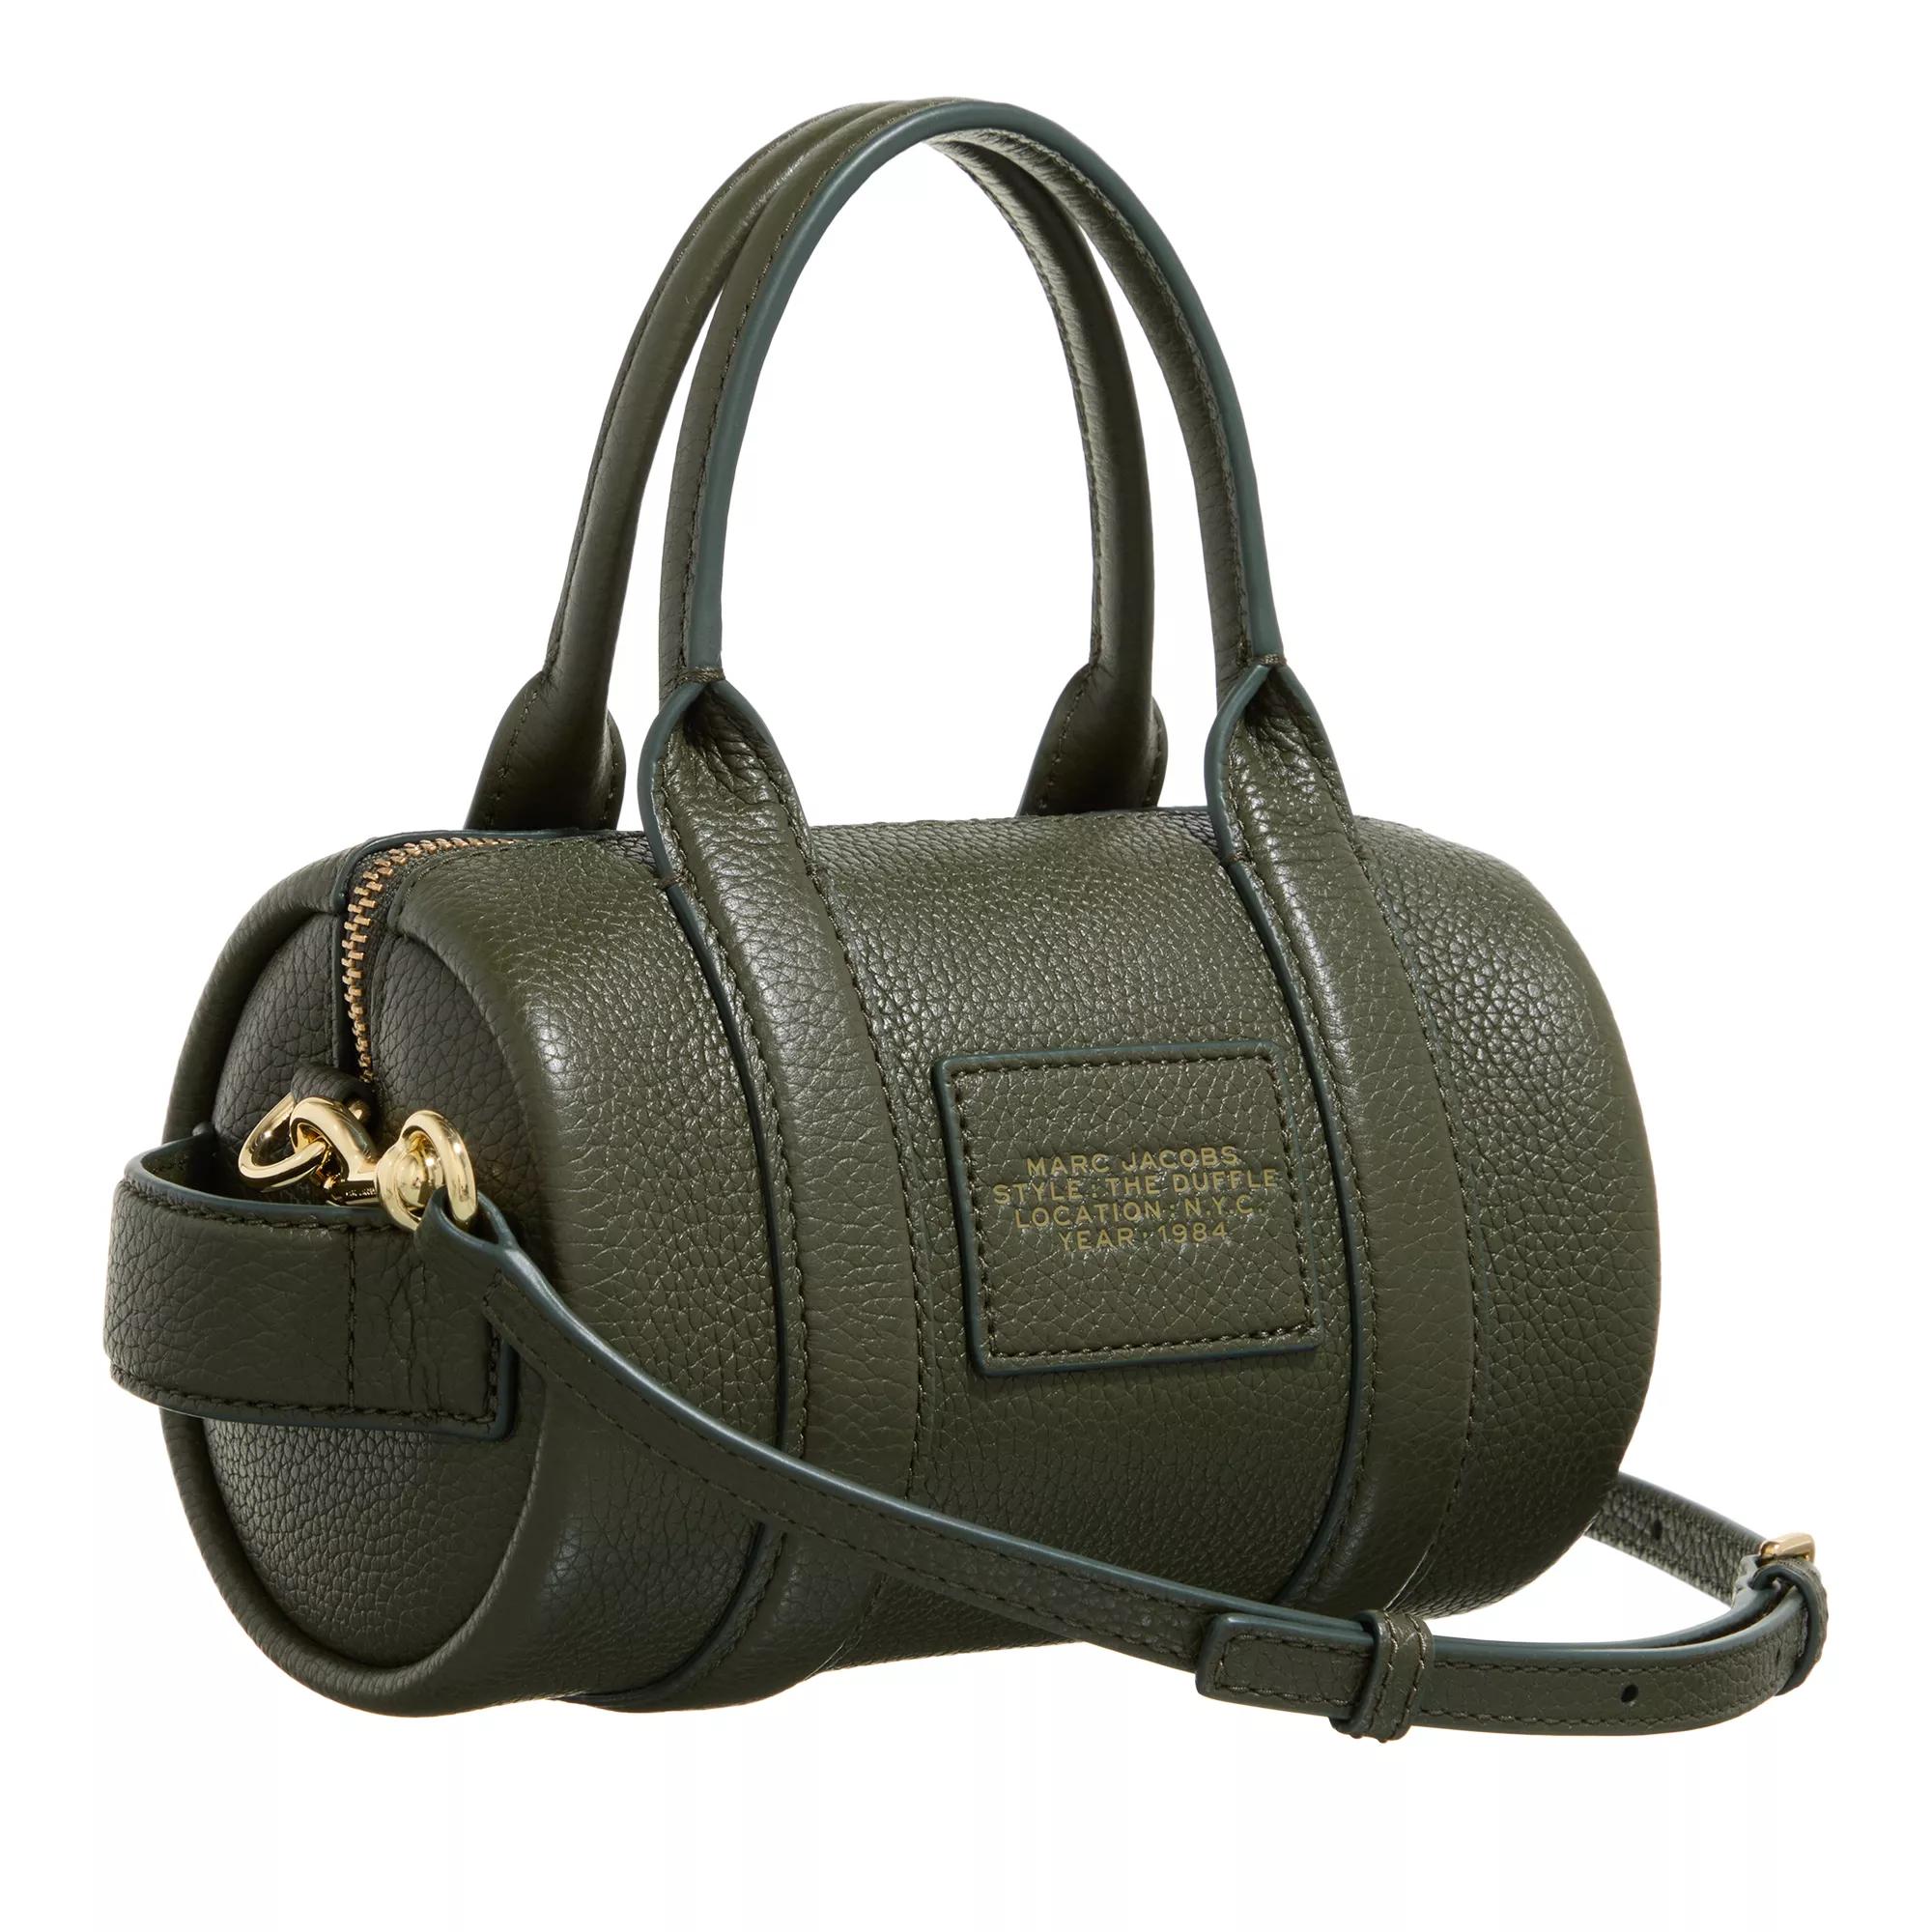 Marc Jacobs Reistassen The Mini Leather Duffle Bag in groen